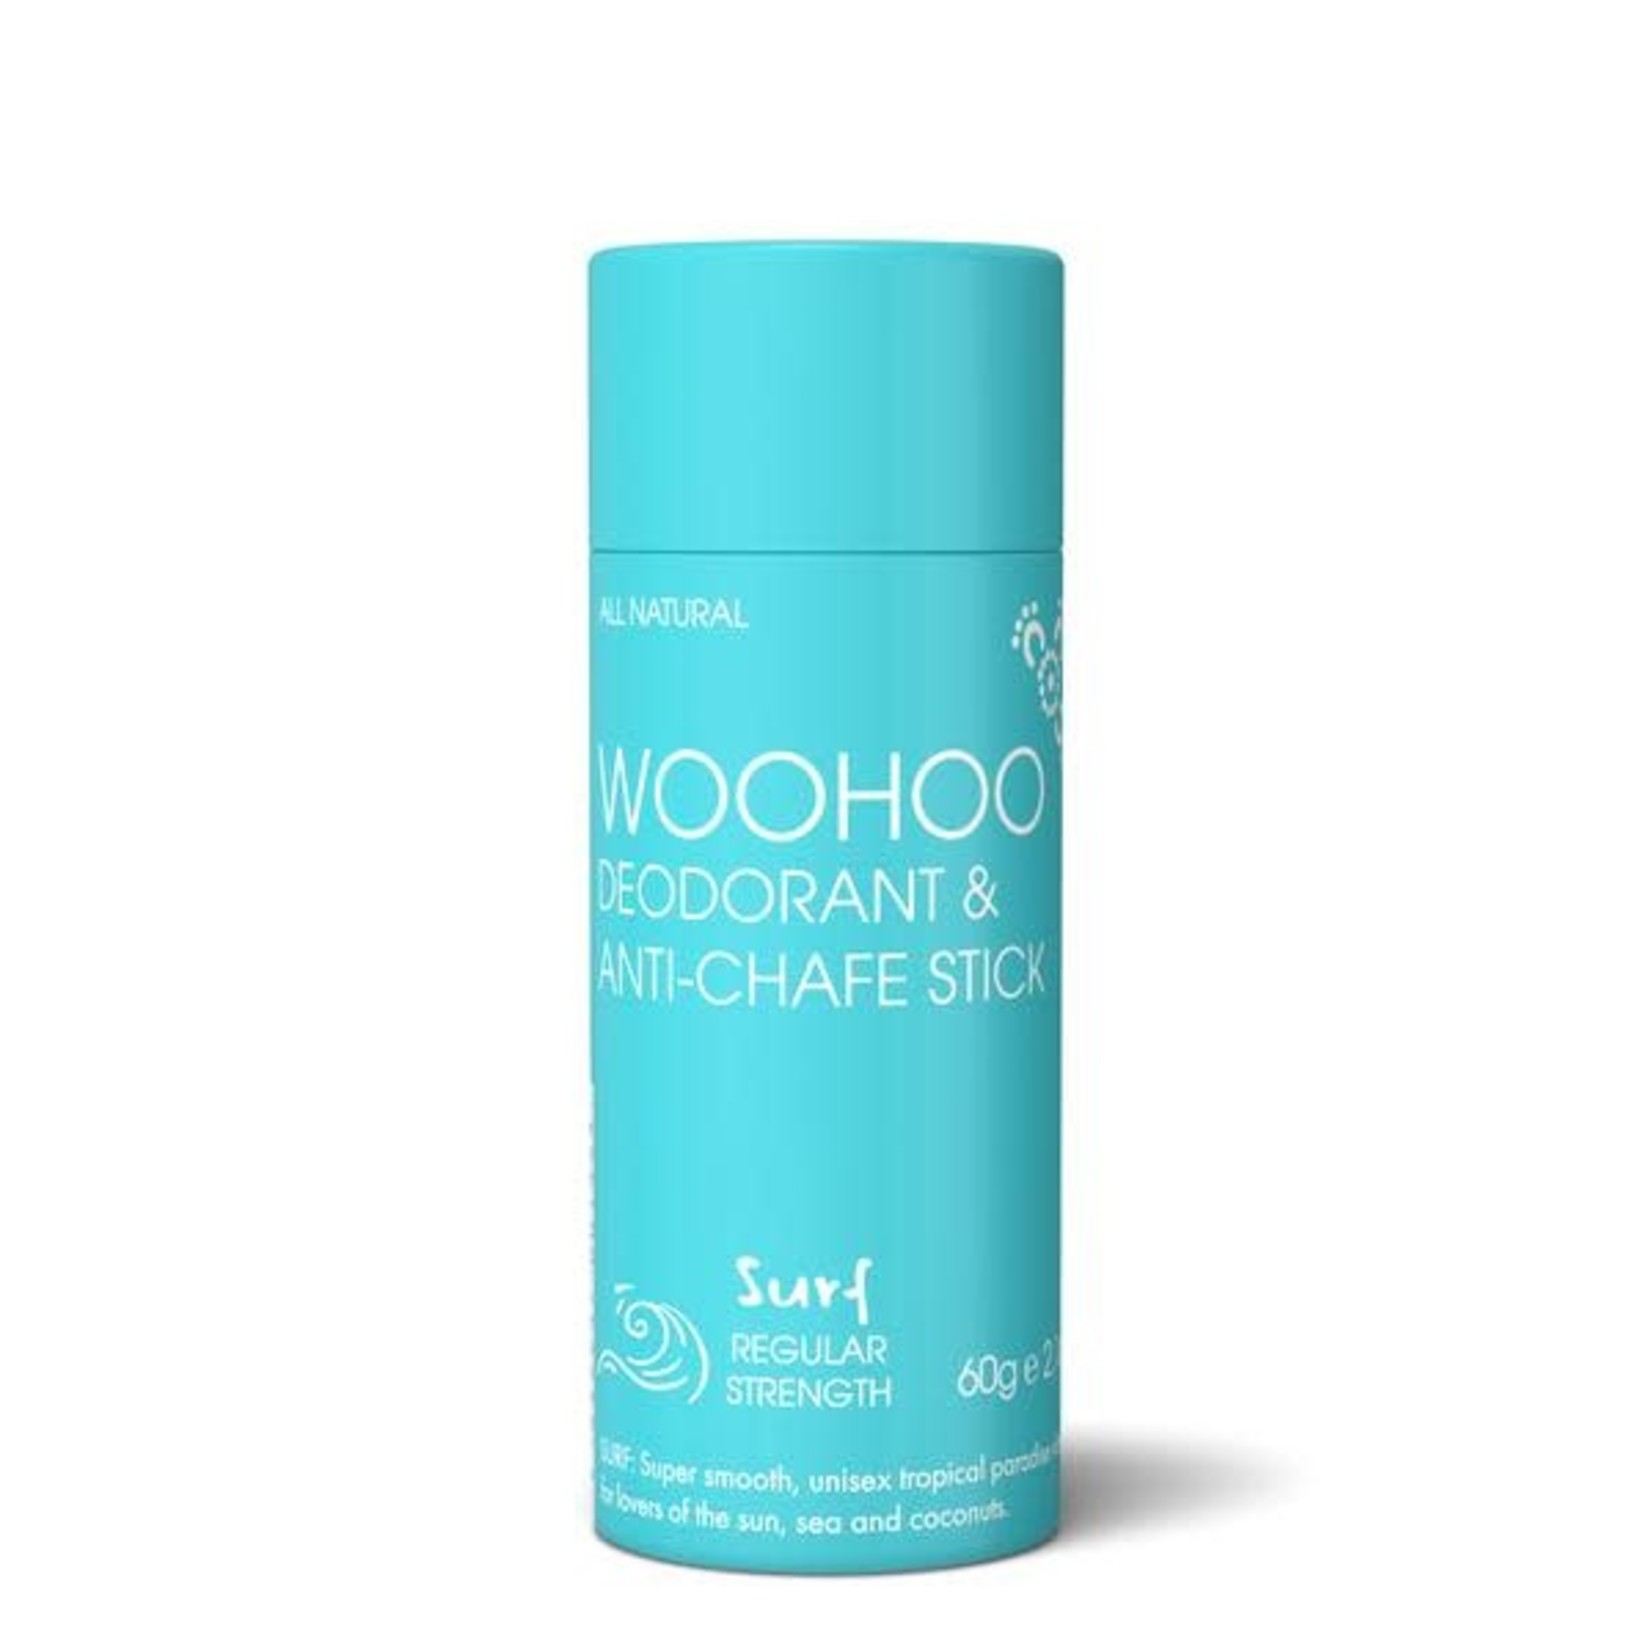 Woohoo Body Woohoo deodorant & anti-chafe stick Surf